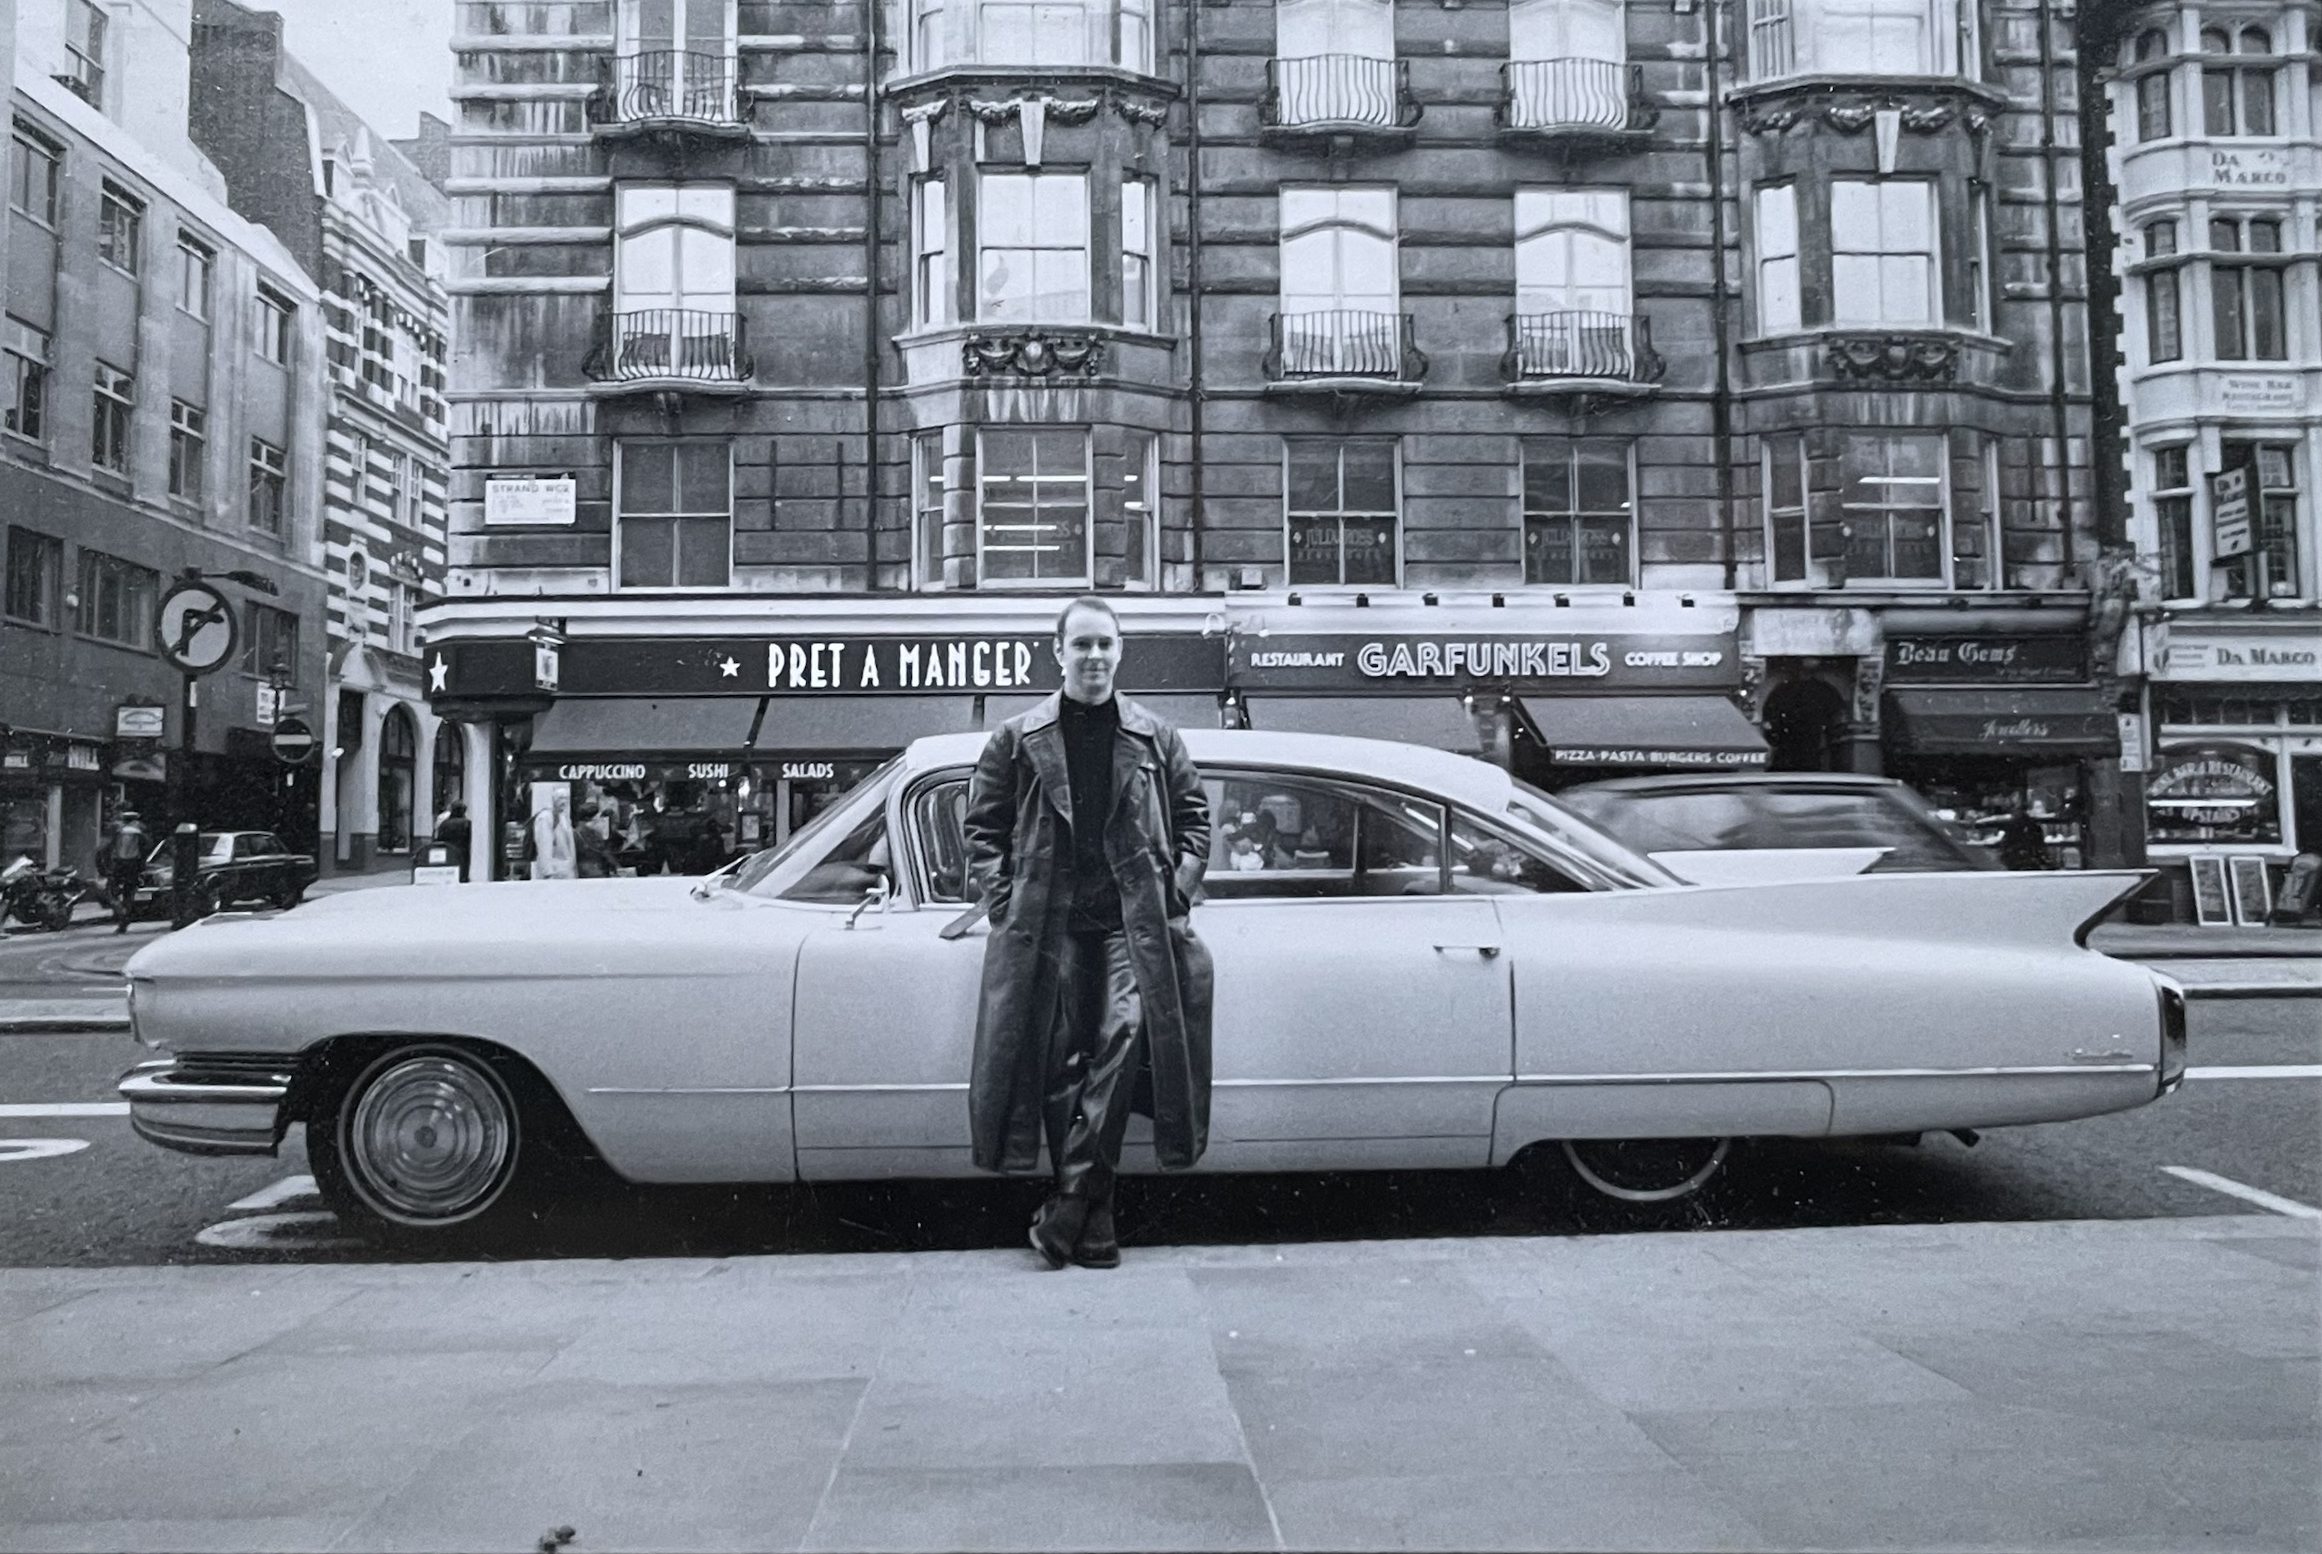 The One That Got Away: Marc Allum’s 1960 Cadillac Sedan de Ville